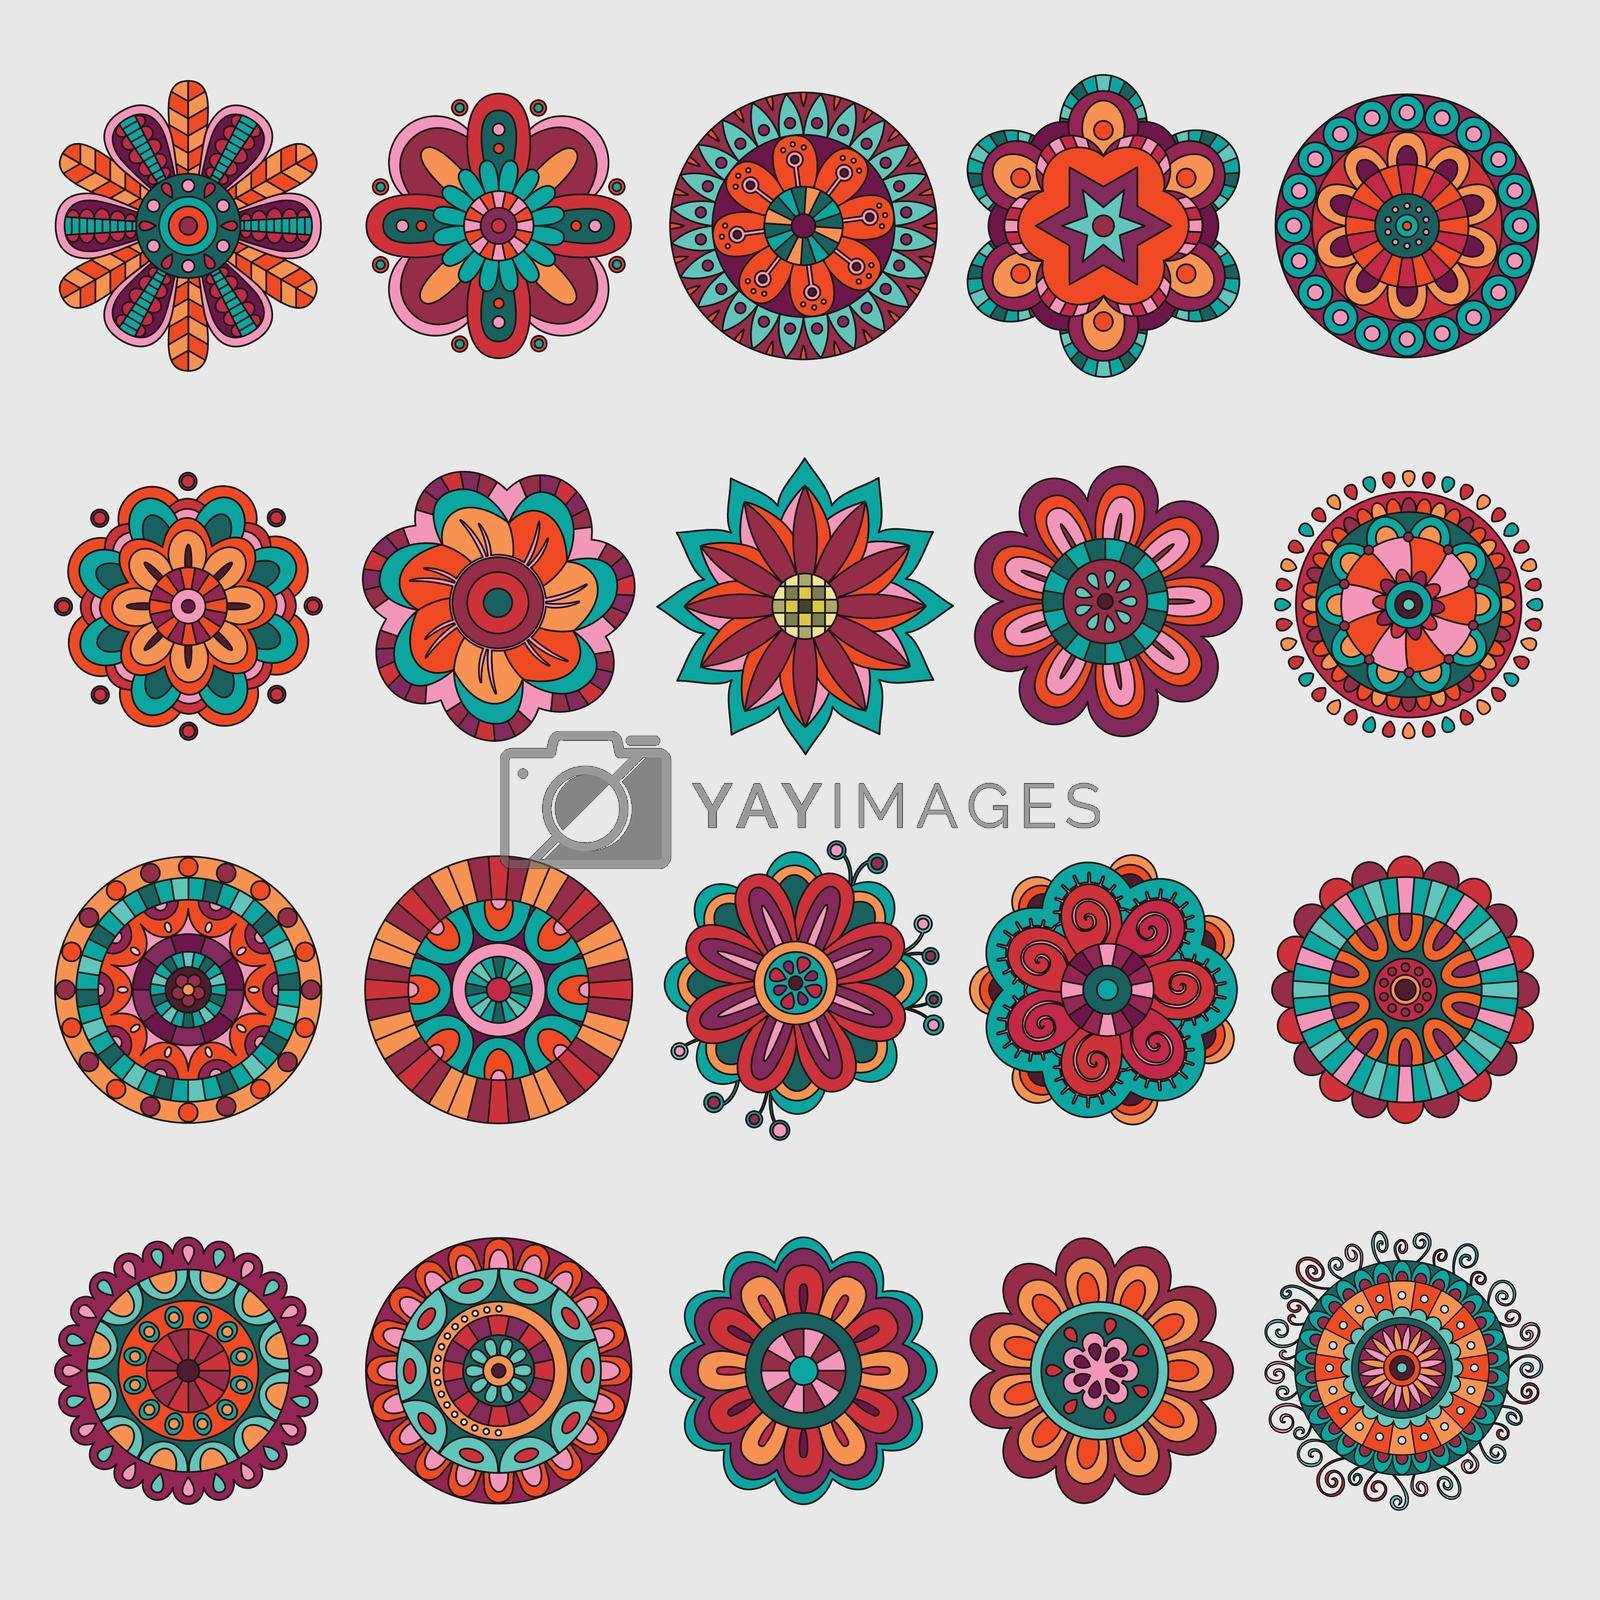 Royalty free image of Set of floral design elements by balabolka